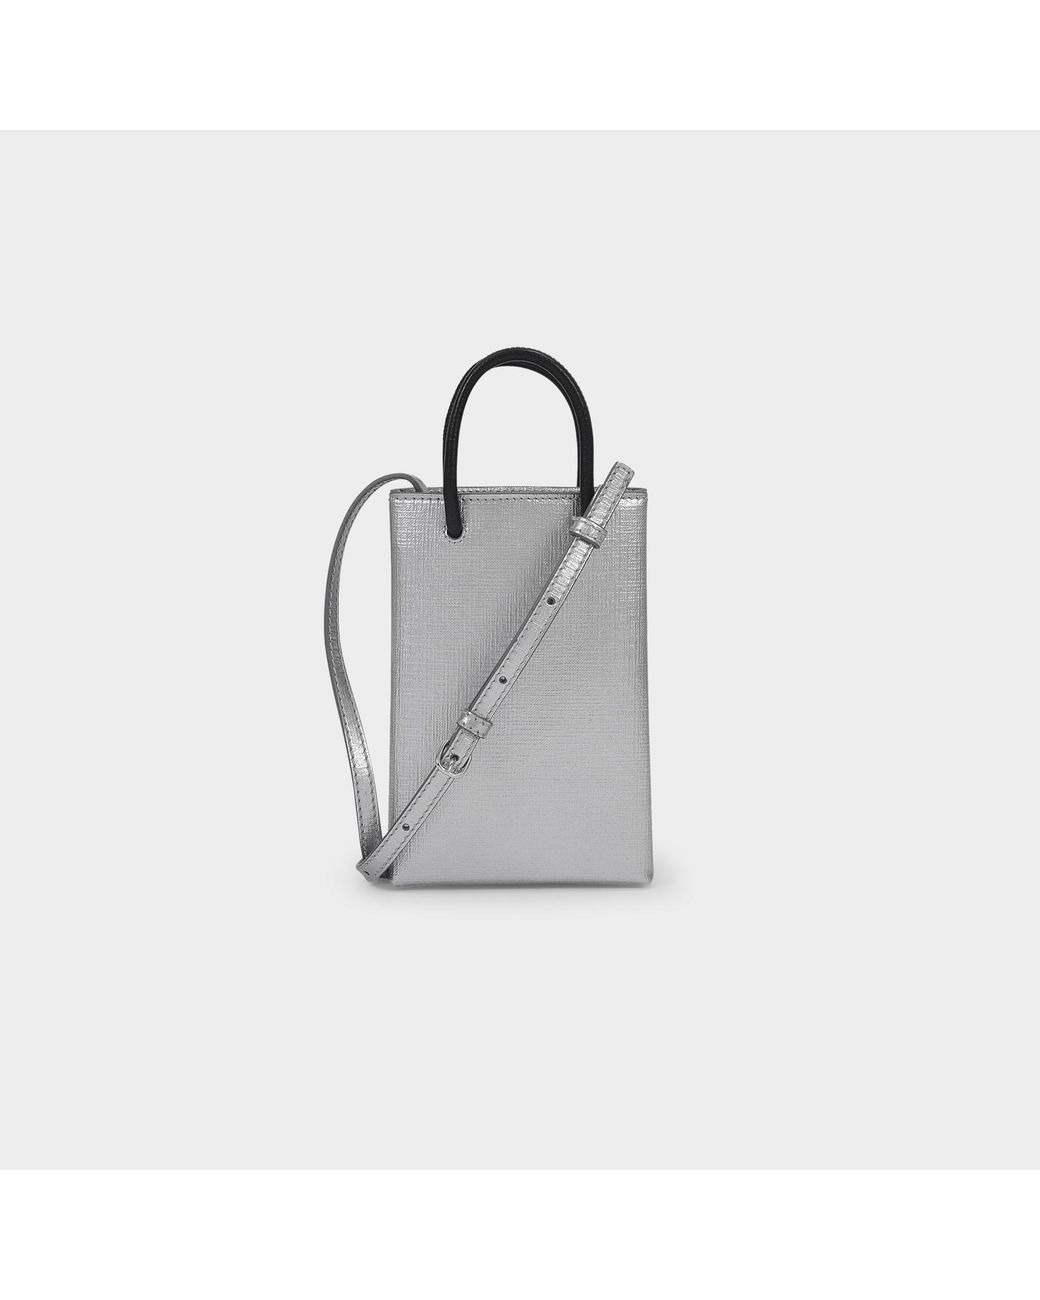 Balenciaga 2020 Mini 'Miami' Phone Shopping Bag - Black Crossbody